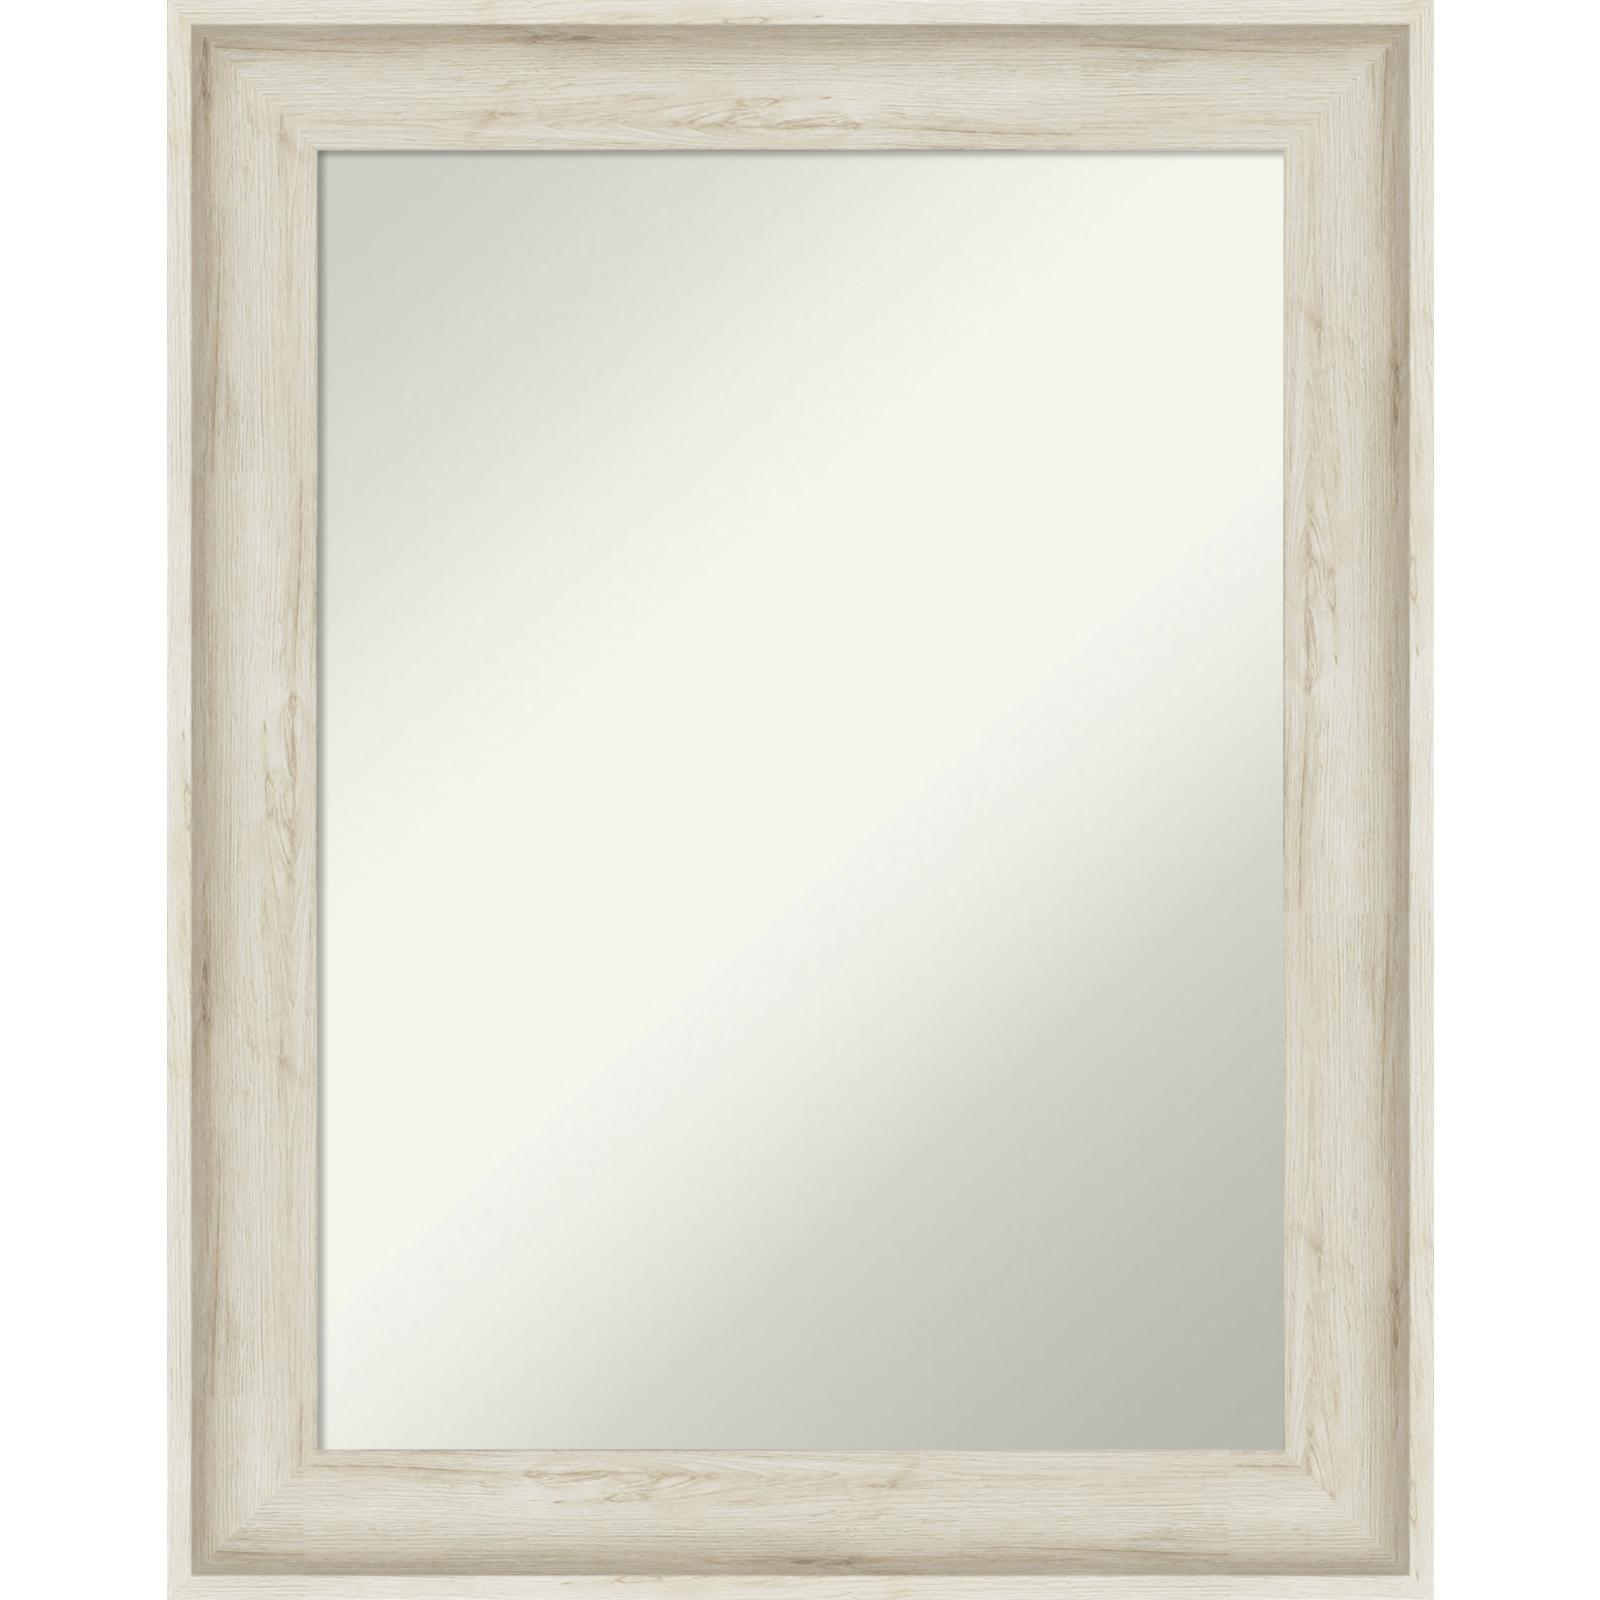 Regal Birch Cream Rustic Whitewash Bathroom Vanity Mirror 22.75x28.75in